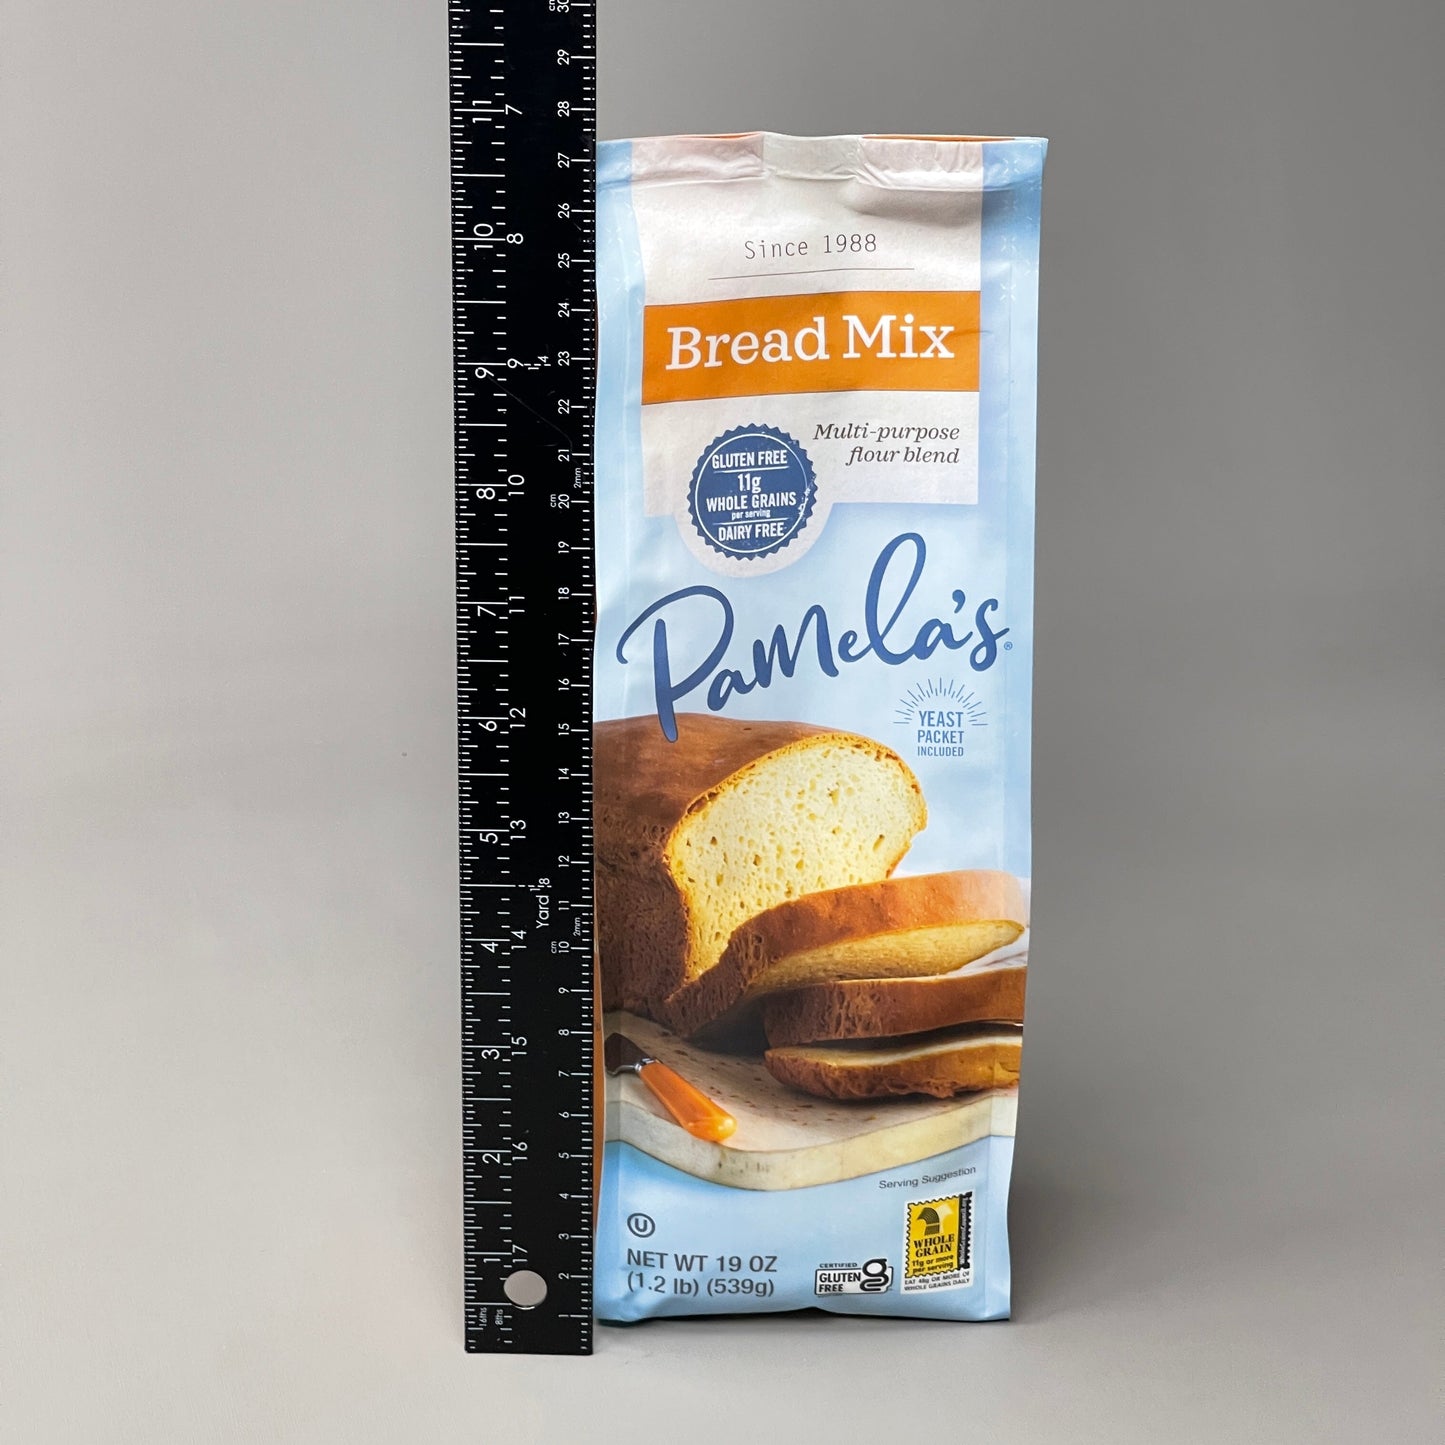 Z@ PAMELA’ S Lot Of 6 Bread Mix Multi-purpose flour blend Gluten/Dairy Free BB 9/1/23 (AS-IS)